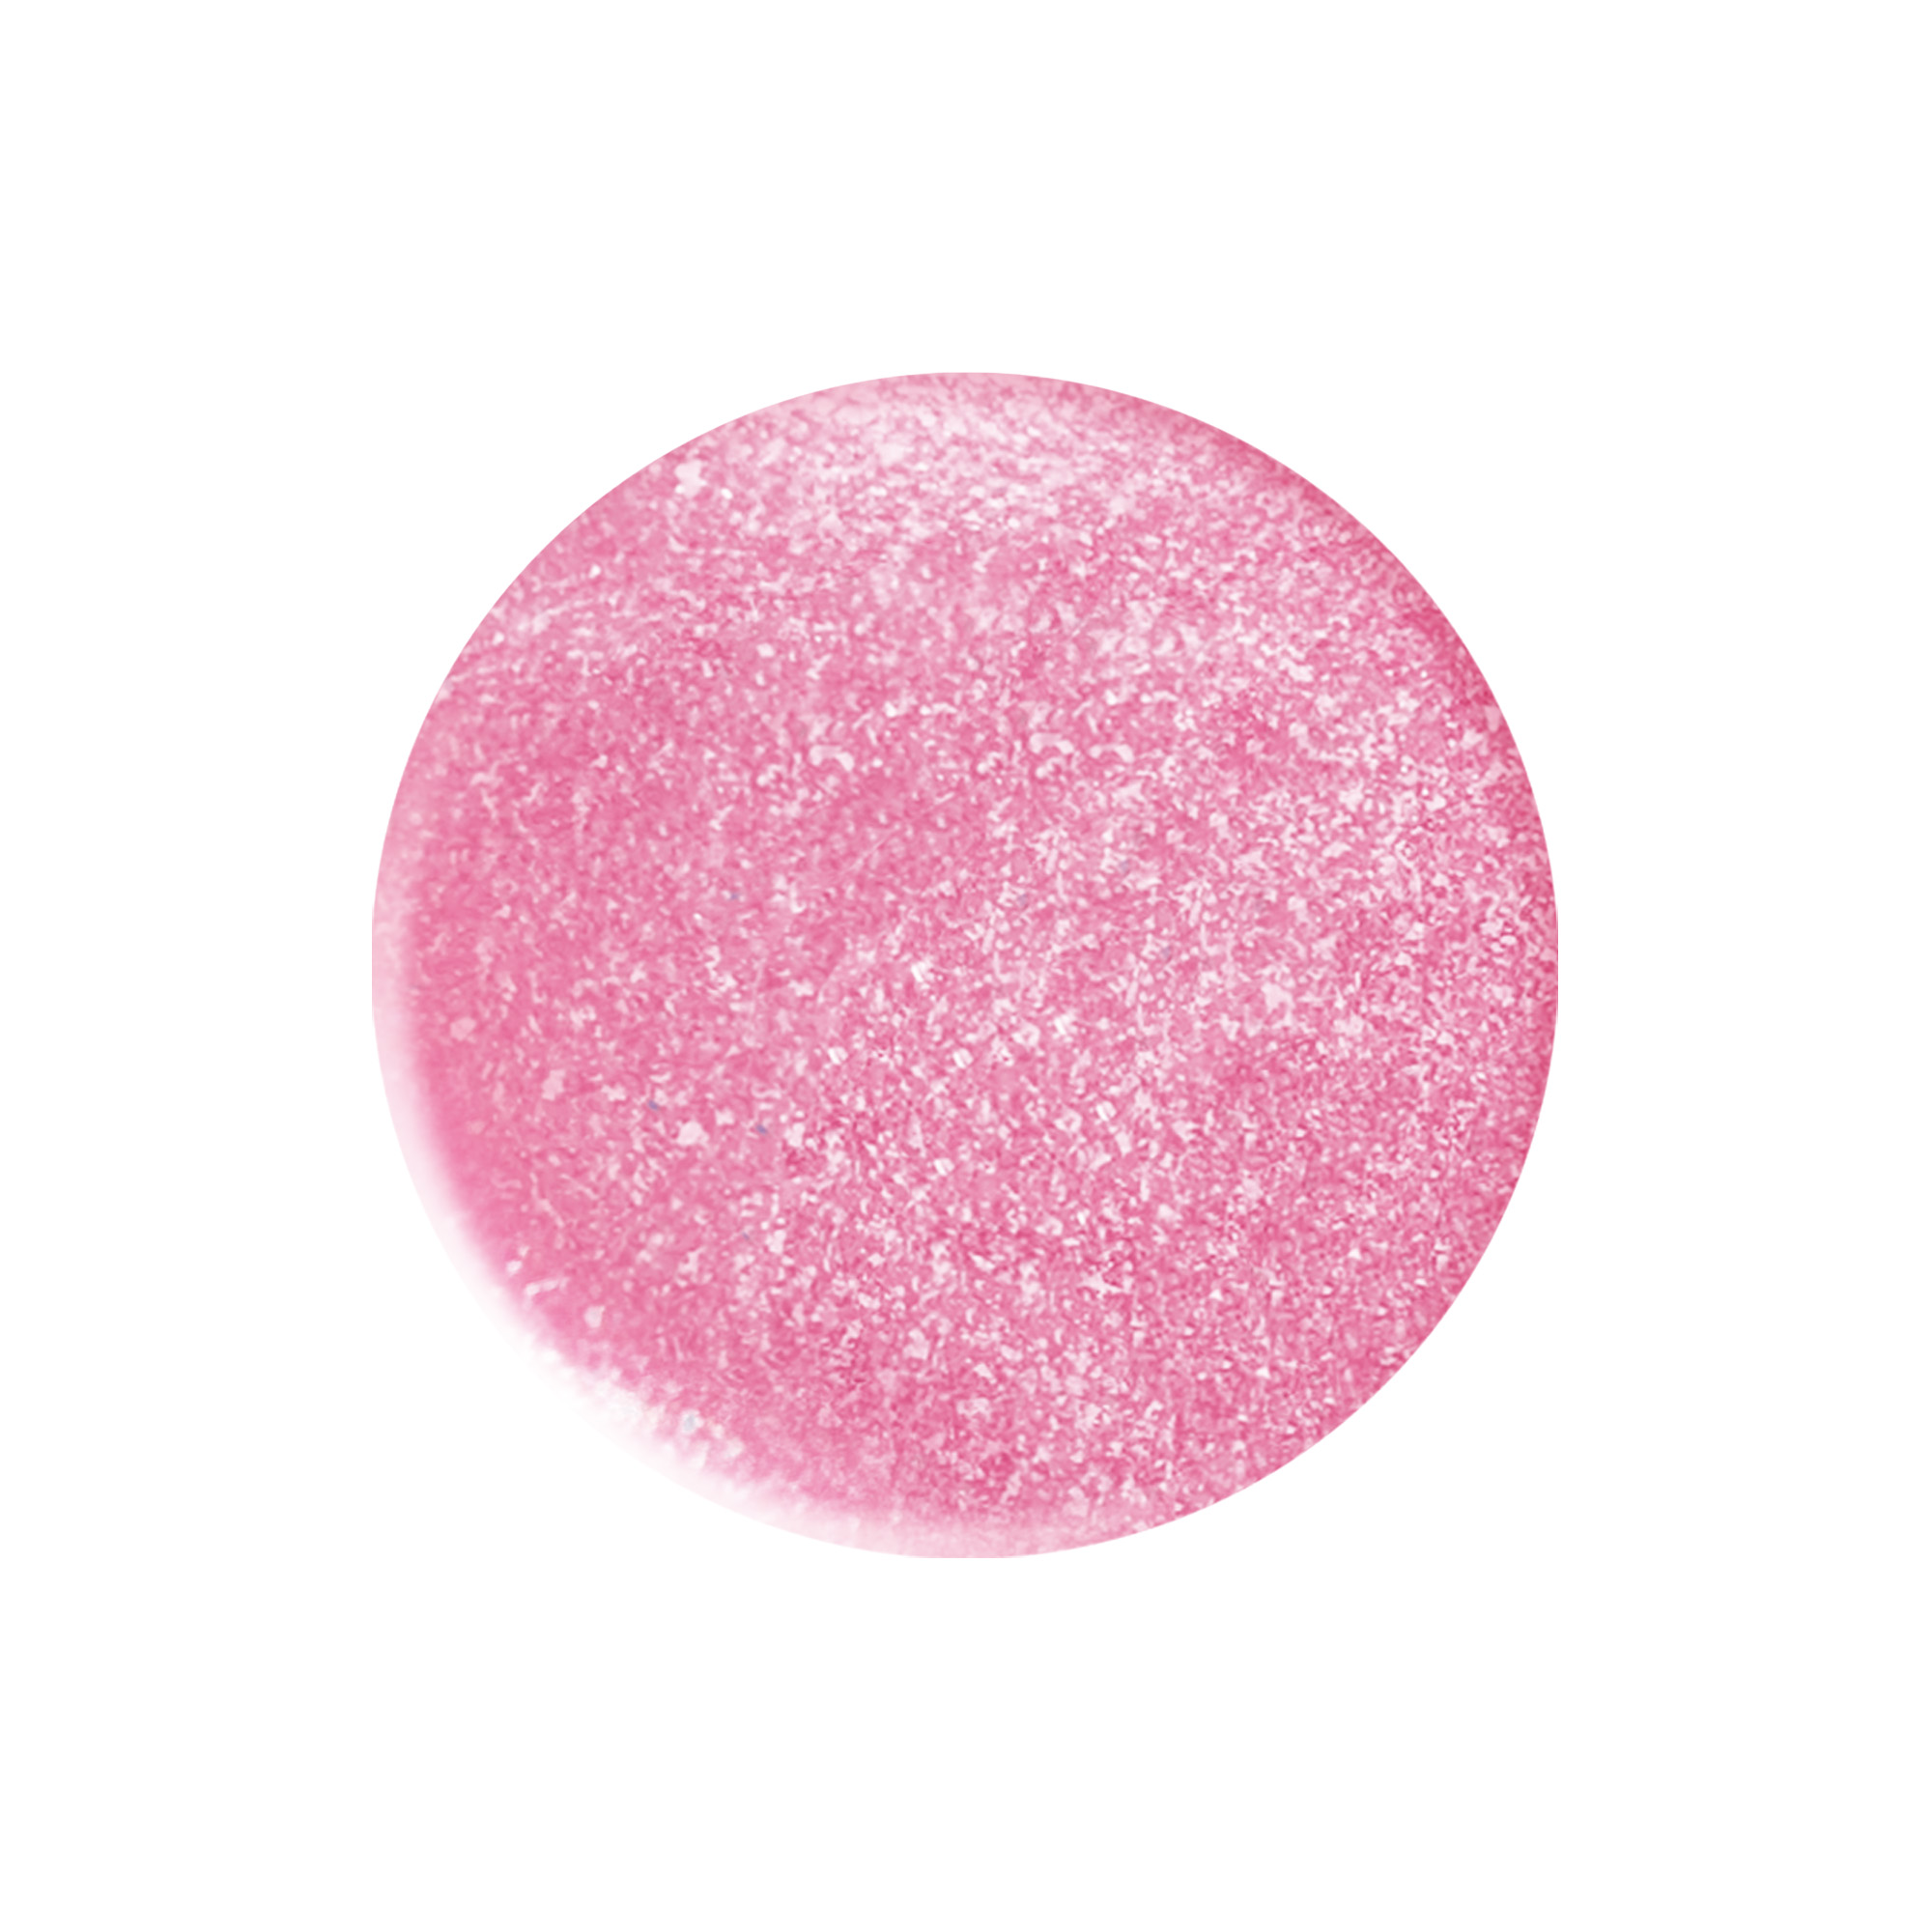 Nagellack Star Dust Rosa Glitter 10 ml TNS